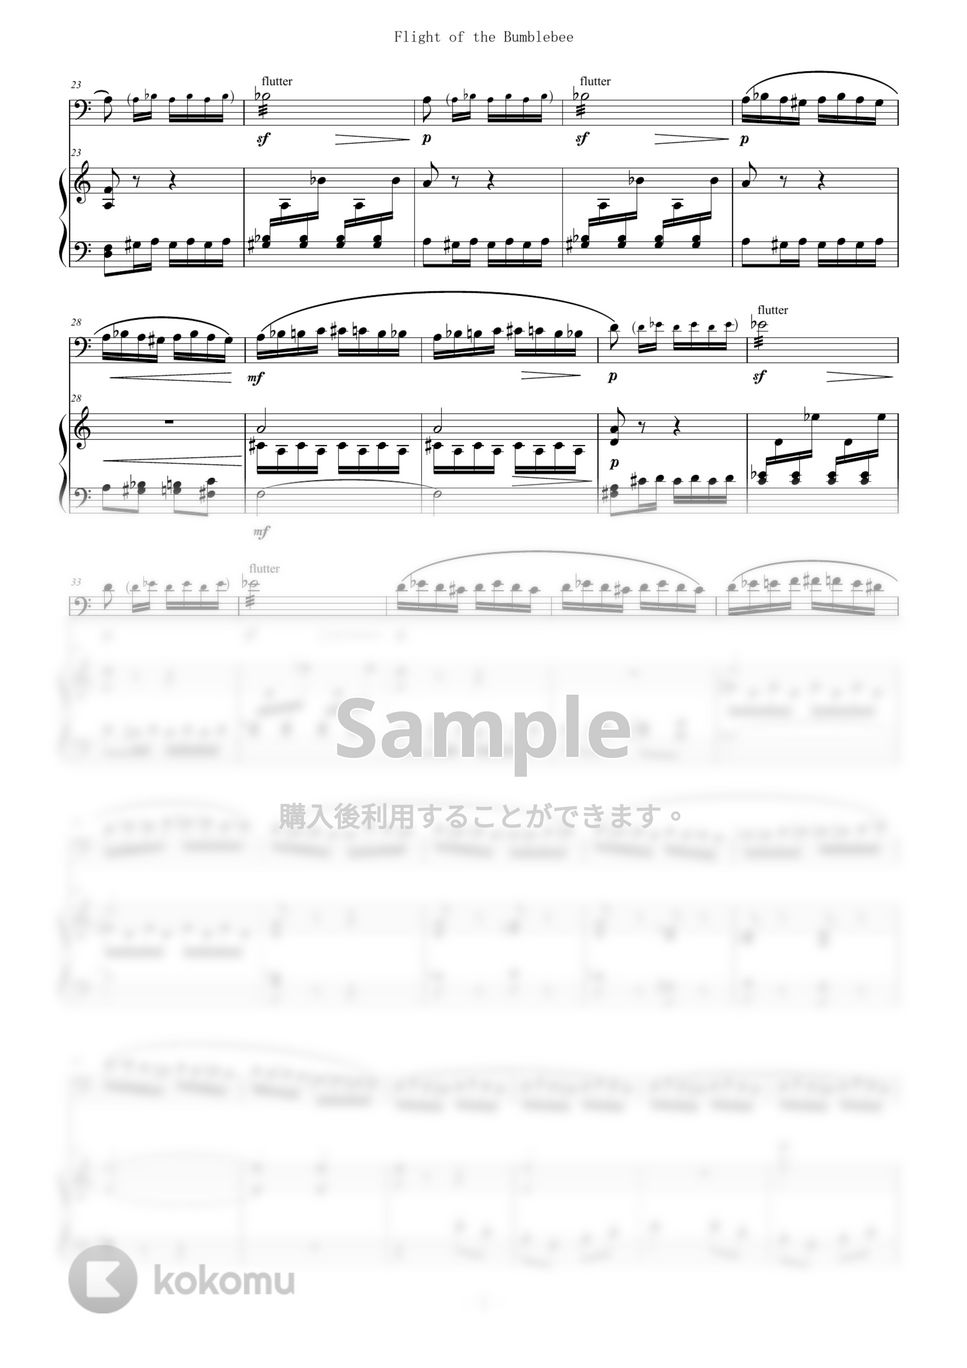 Rimsky-Korsakov - 熊蜂の飛行 for Euphonium and Piano (Flight of the Bumblebee) (Piano/Euphonium/ピアノ/ユーフォ/ユーフォニアム) by Zoe